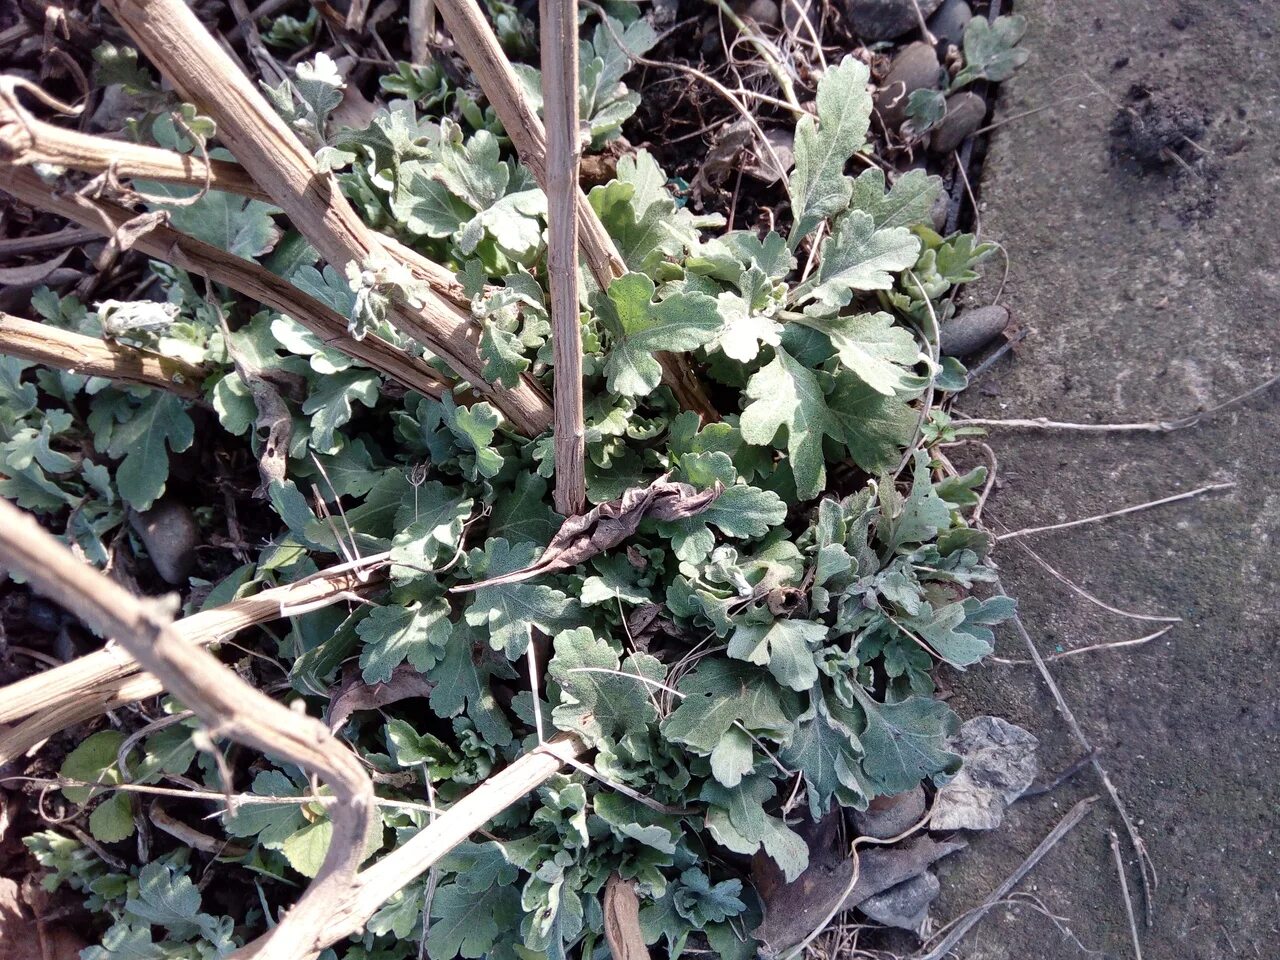 Побег хризантемы. Гниение побега хризантемы. Побеги хризантемы съедобные. Почки на хризантеме. Тосповирус некроза побегов хризантемы Chrysanthemum Stem necrosis Tospovirus.